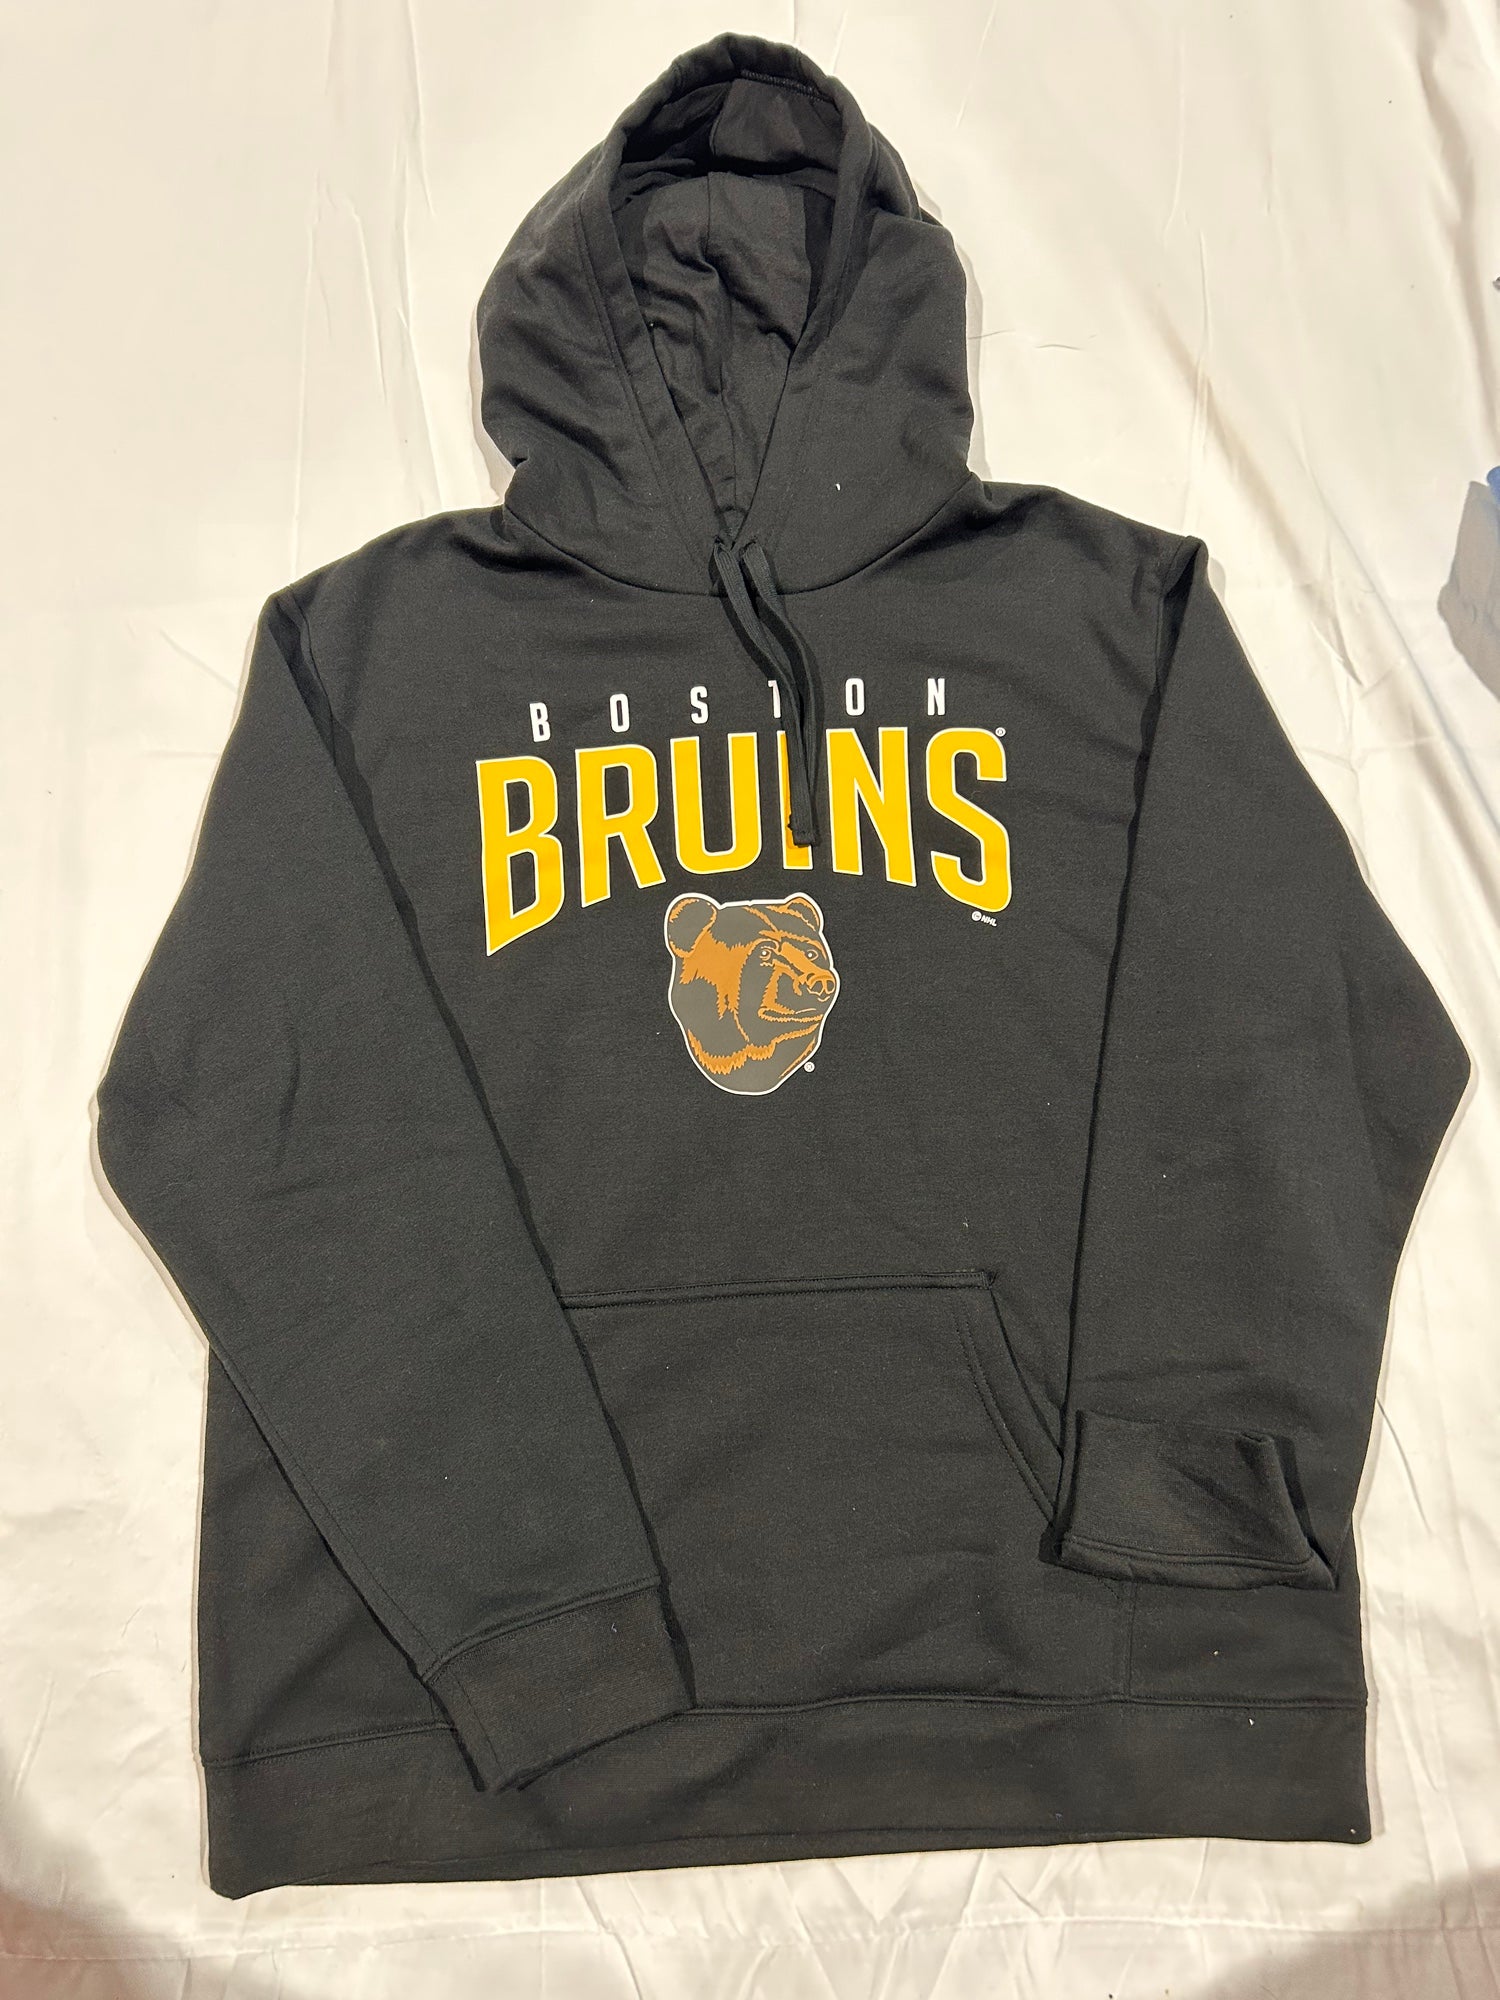 David Pastrnak 50 Goals Boston Bruins signature Shirt, hoodie, sweater,  long sleeve and tank top